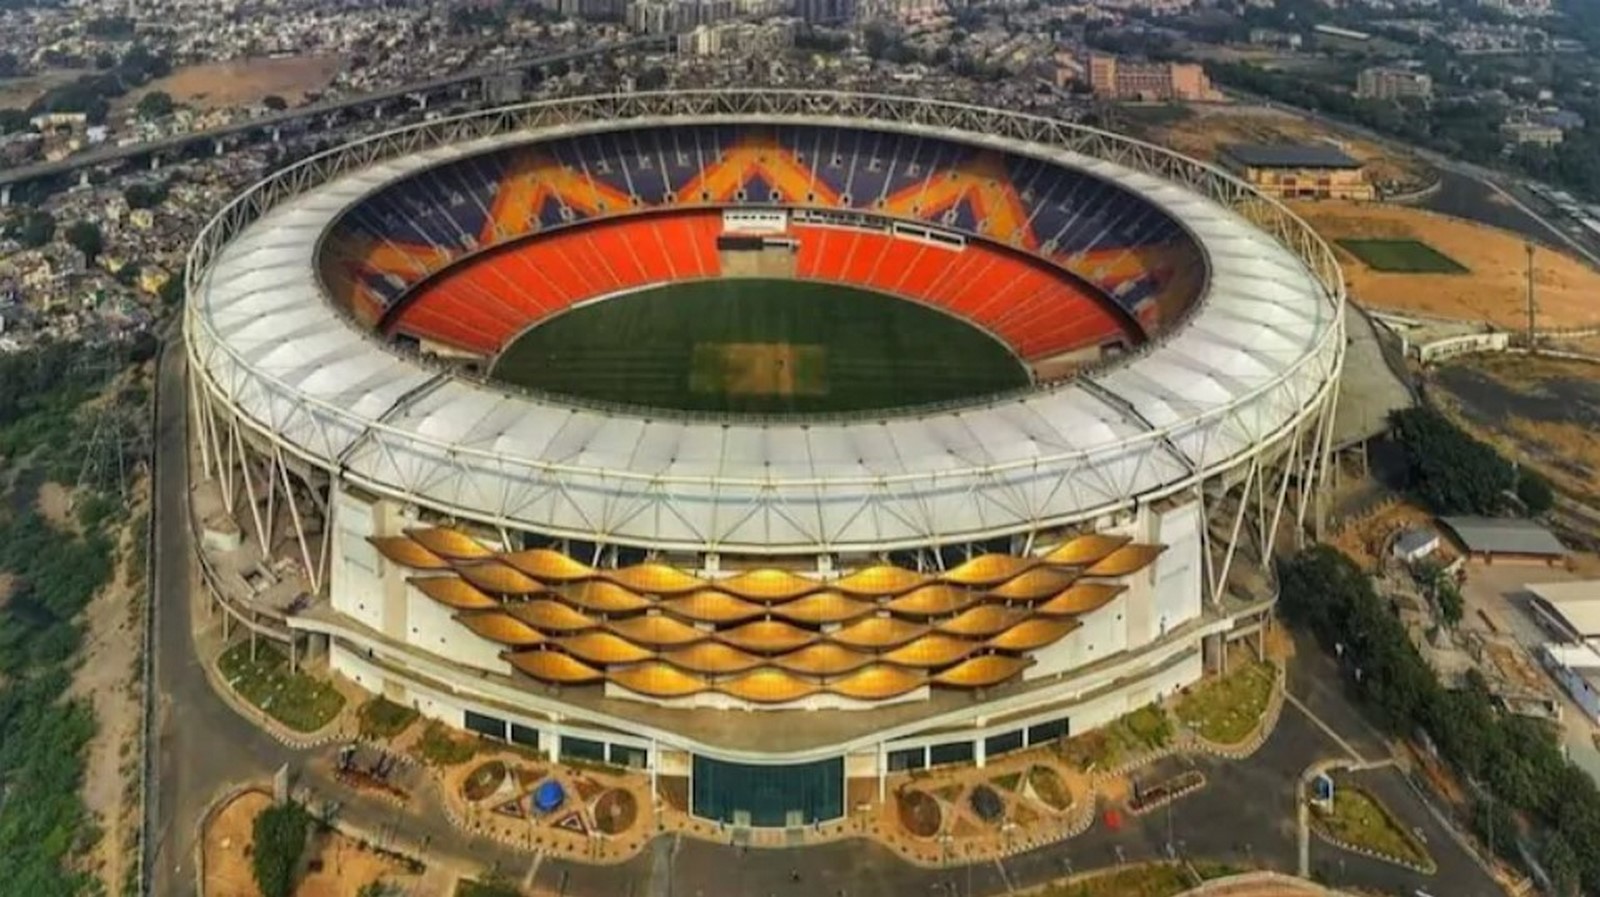 largest stadium in the world